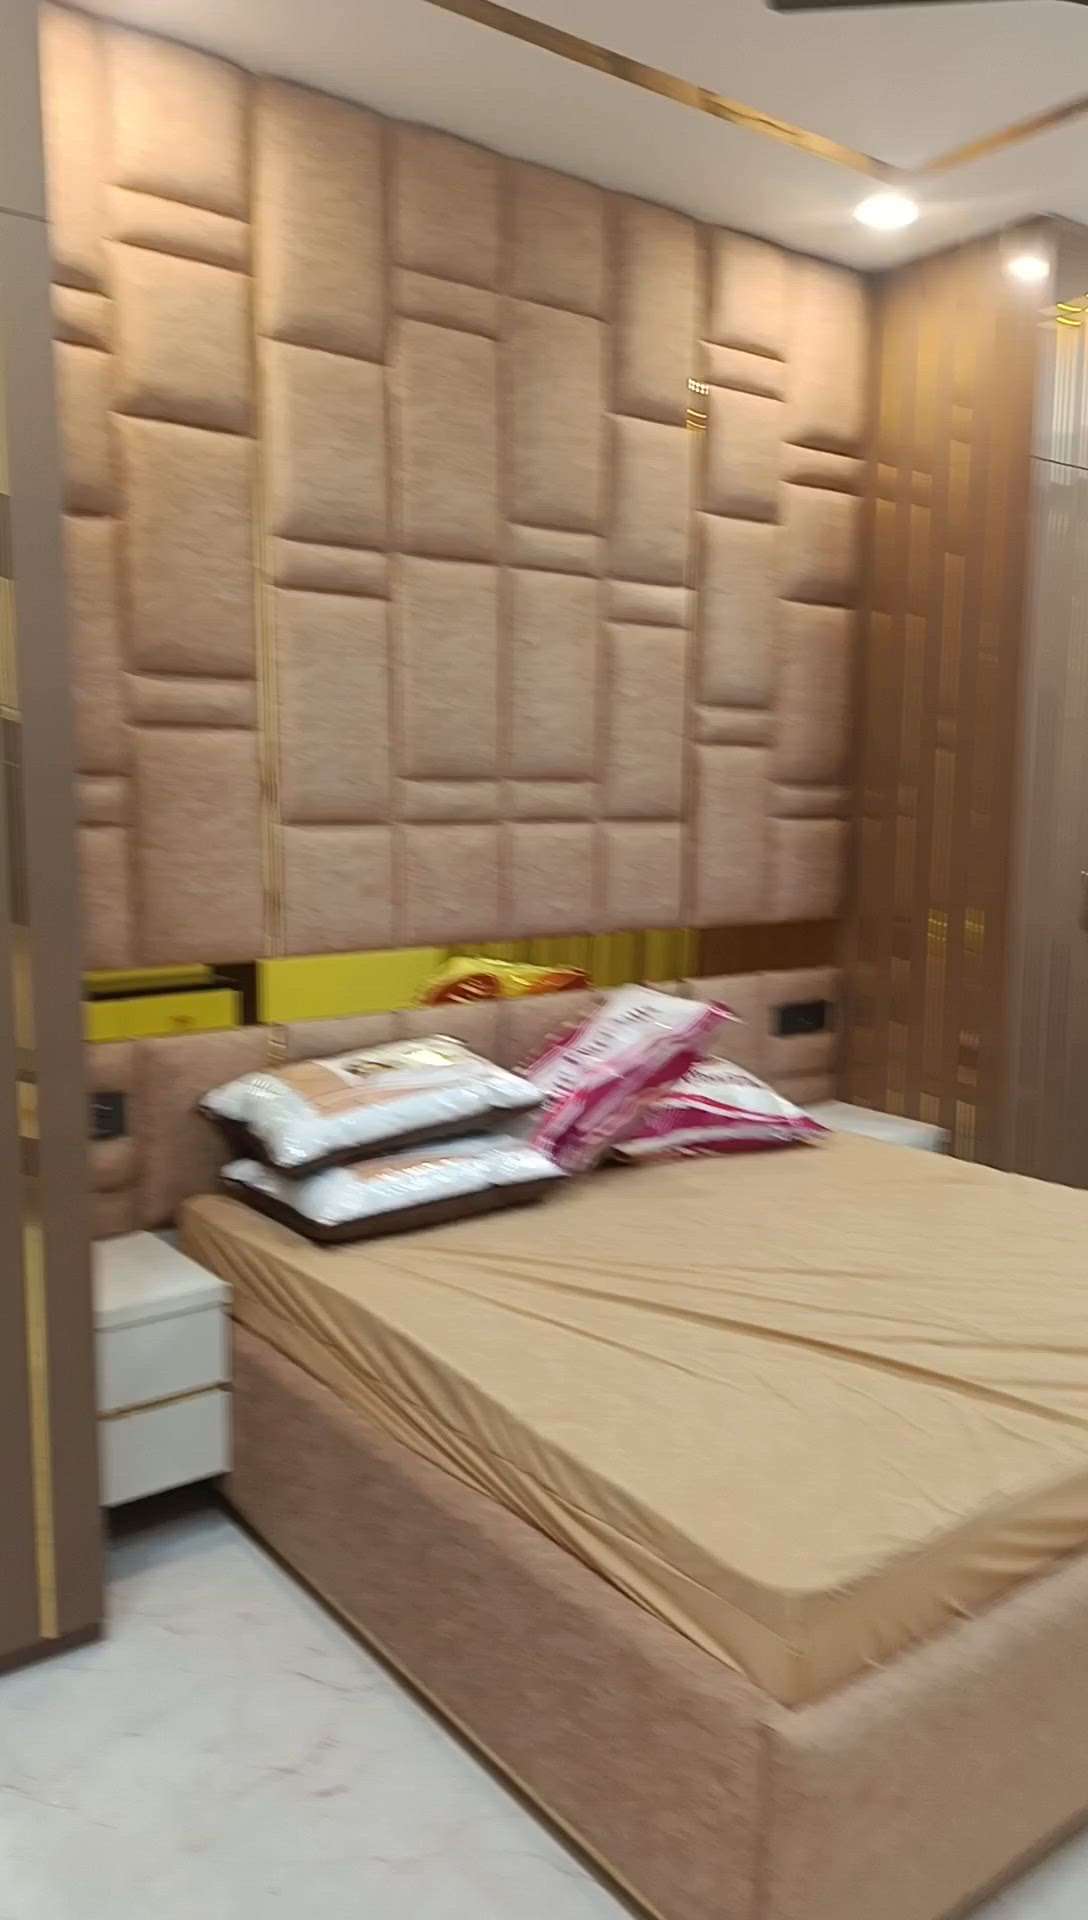 luxury bedroom design  #MasterBedroom  #BedroomDecor  #modularTvunits  #tvpanels  #tvunitinterior  #KingsizeBedroom  #WallDesigns  #bedbackdeisgn